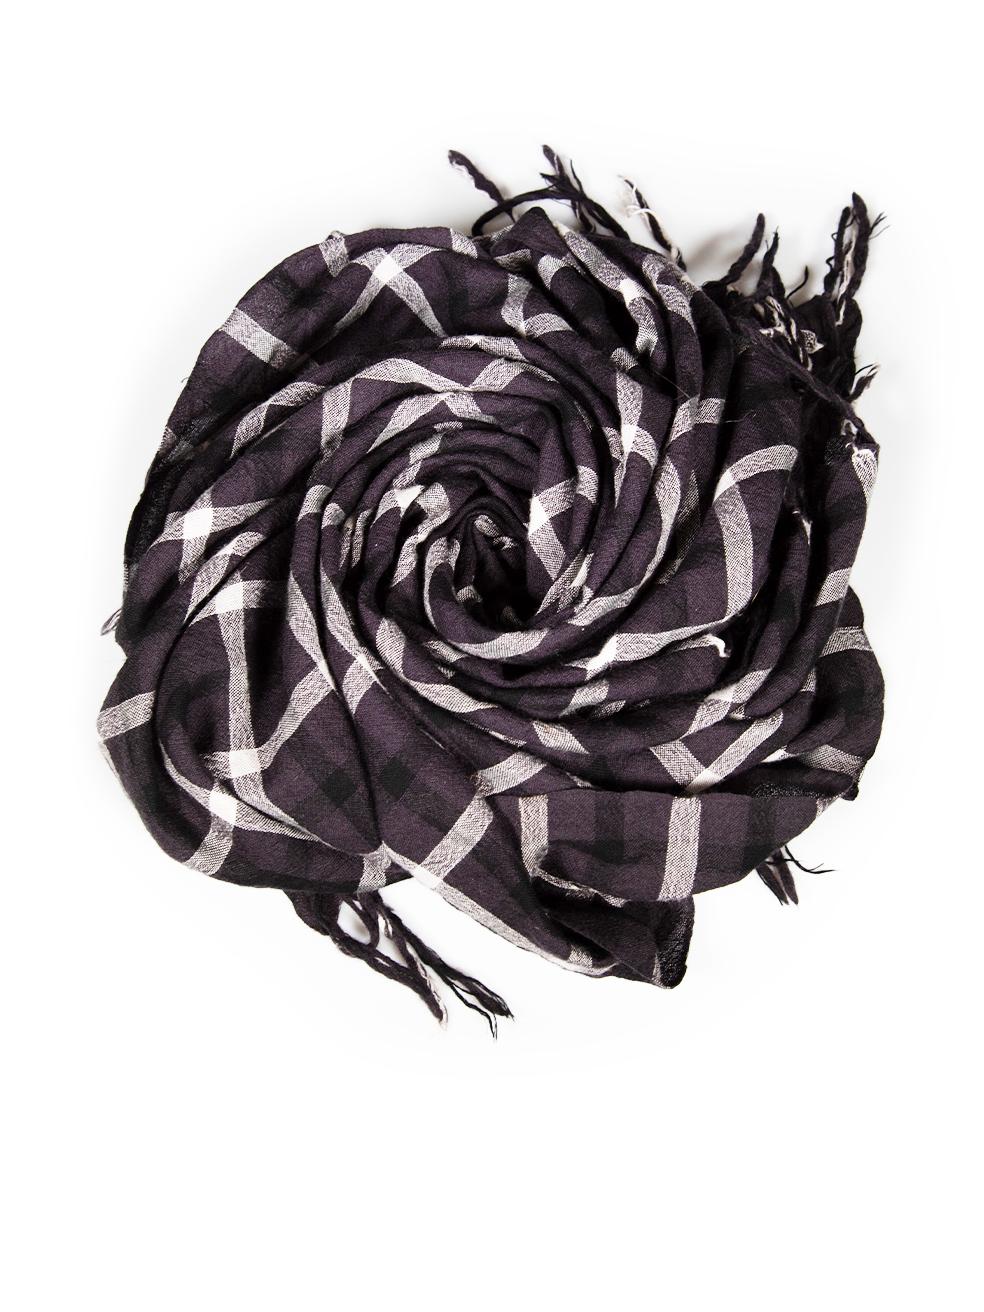 Yohji Yamamoto Black Plaid Pattern Scarf In Good Condition For Sale In London, GB